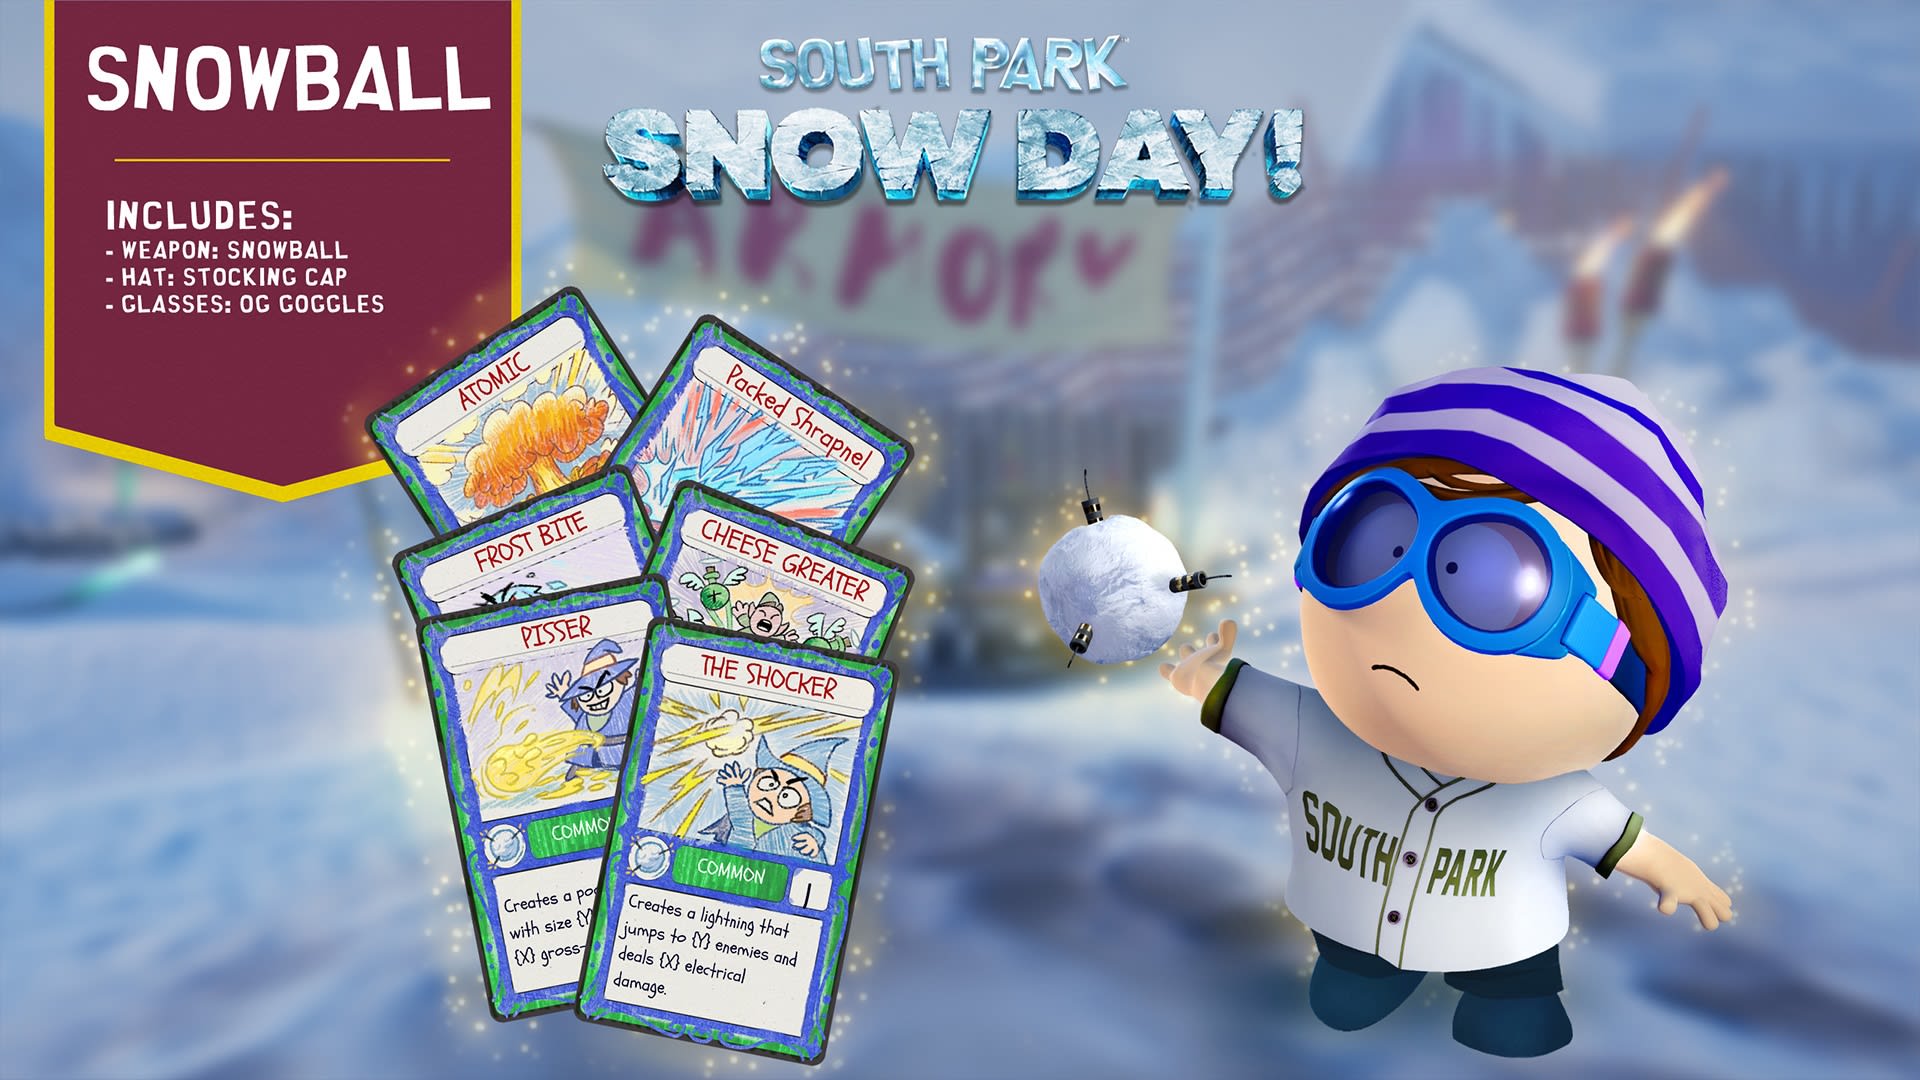 SOUTH PARK: SNOW DAY! Snowball 